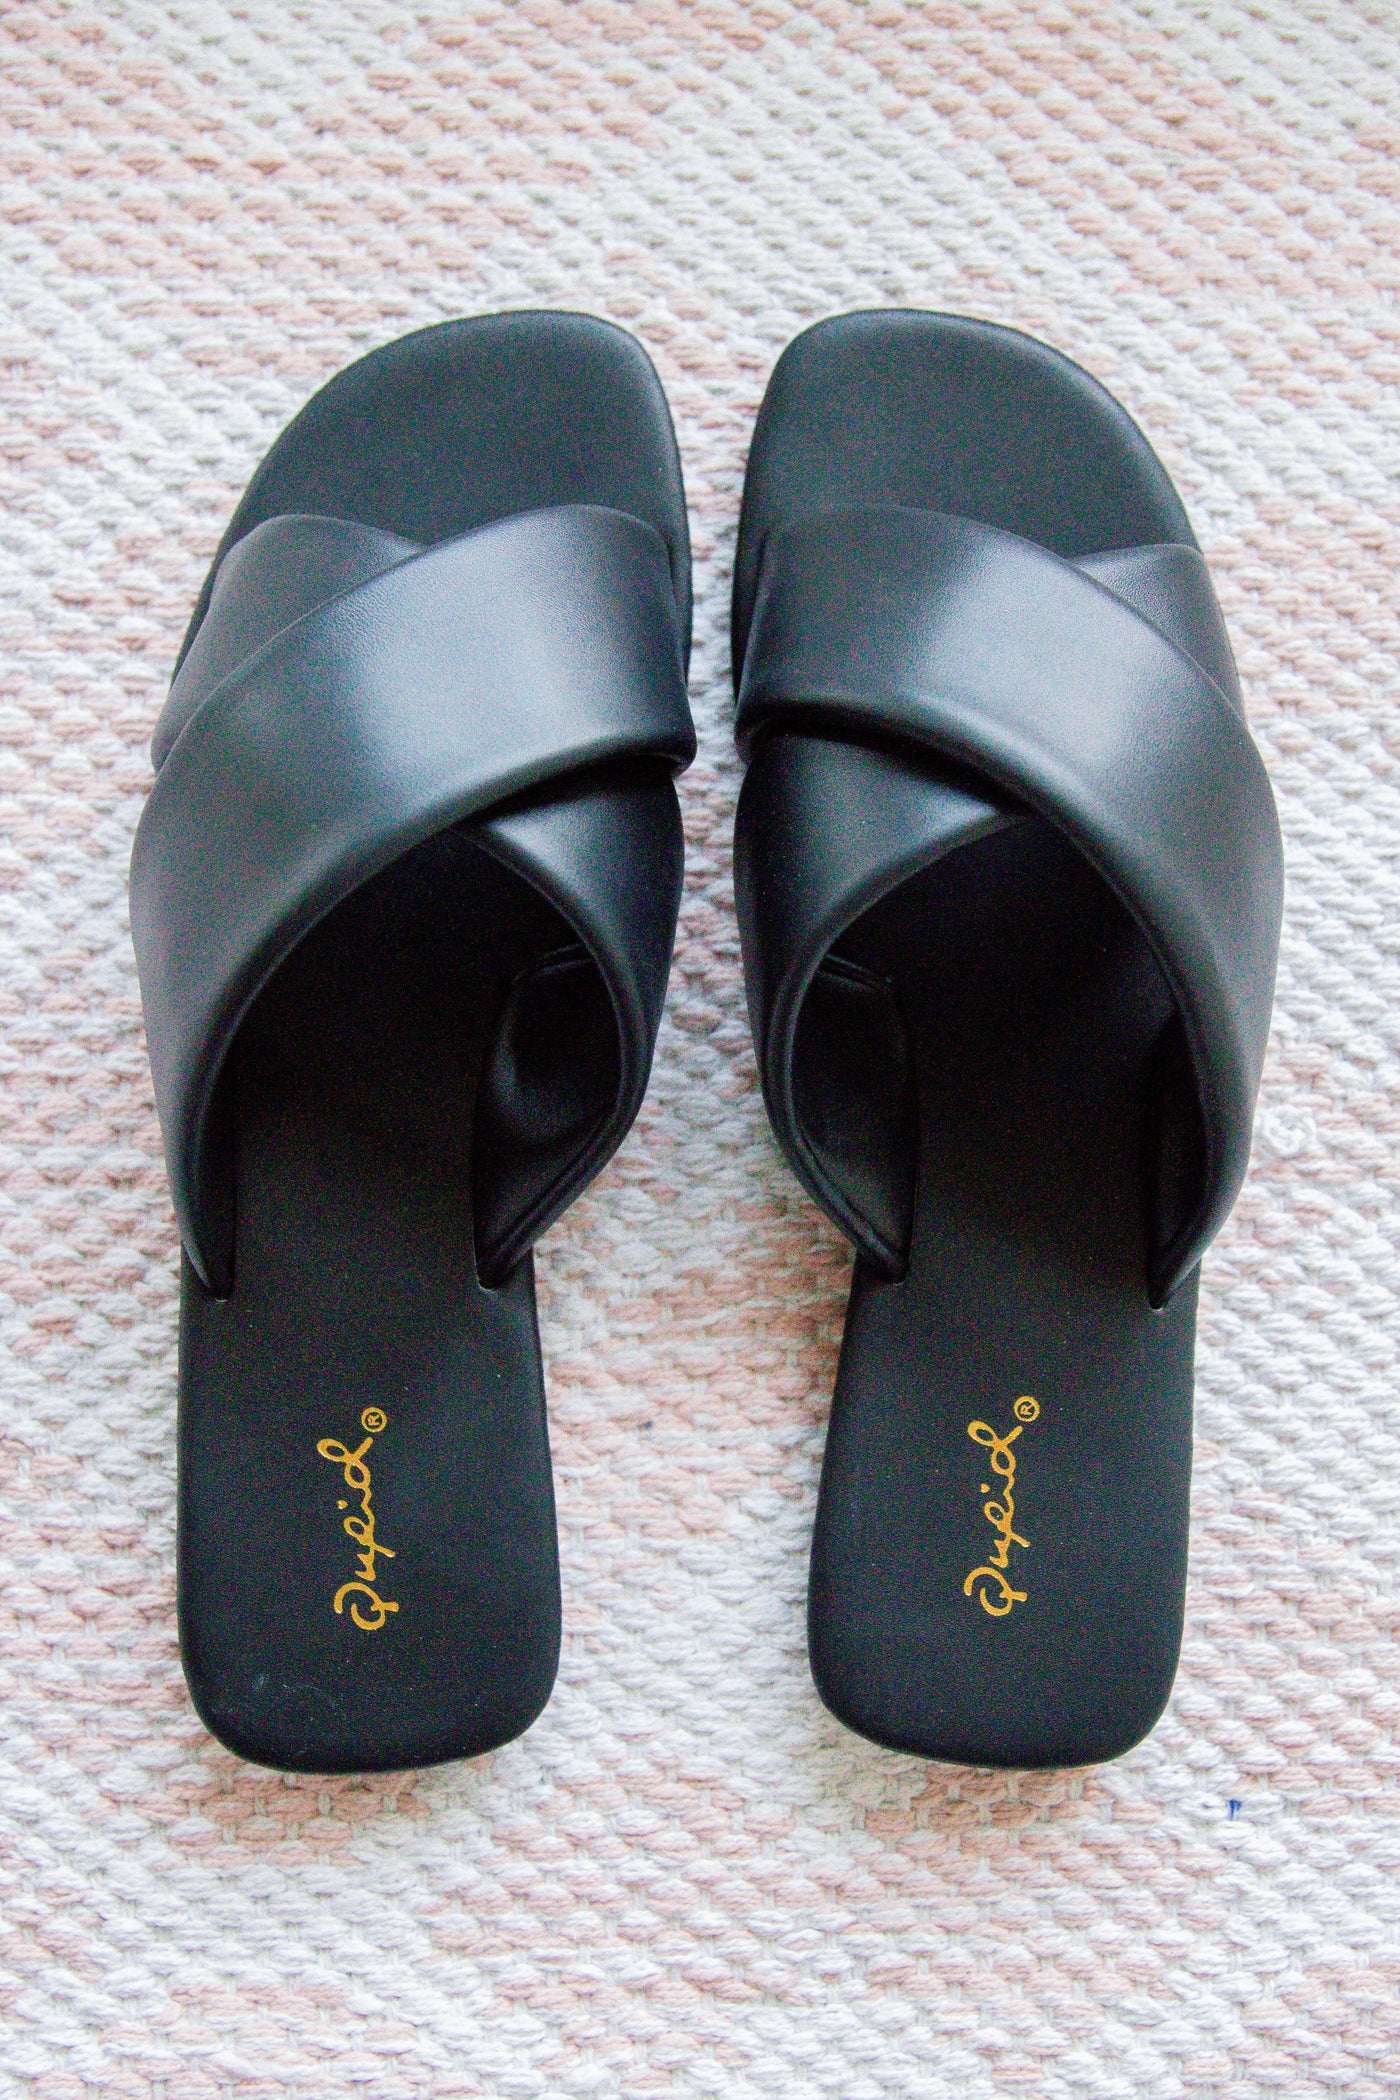 Open Toe Criss Cross Black Sandals - Women's Black Sandals - Qupid Sandals 